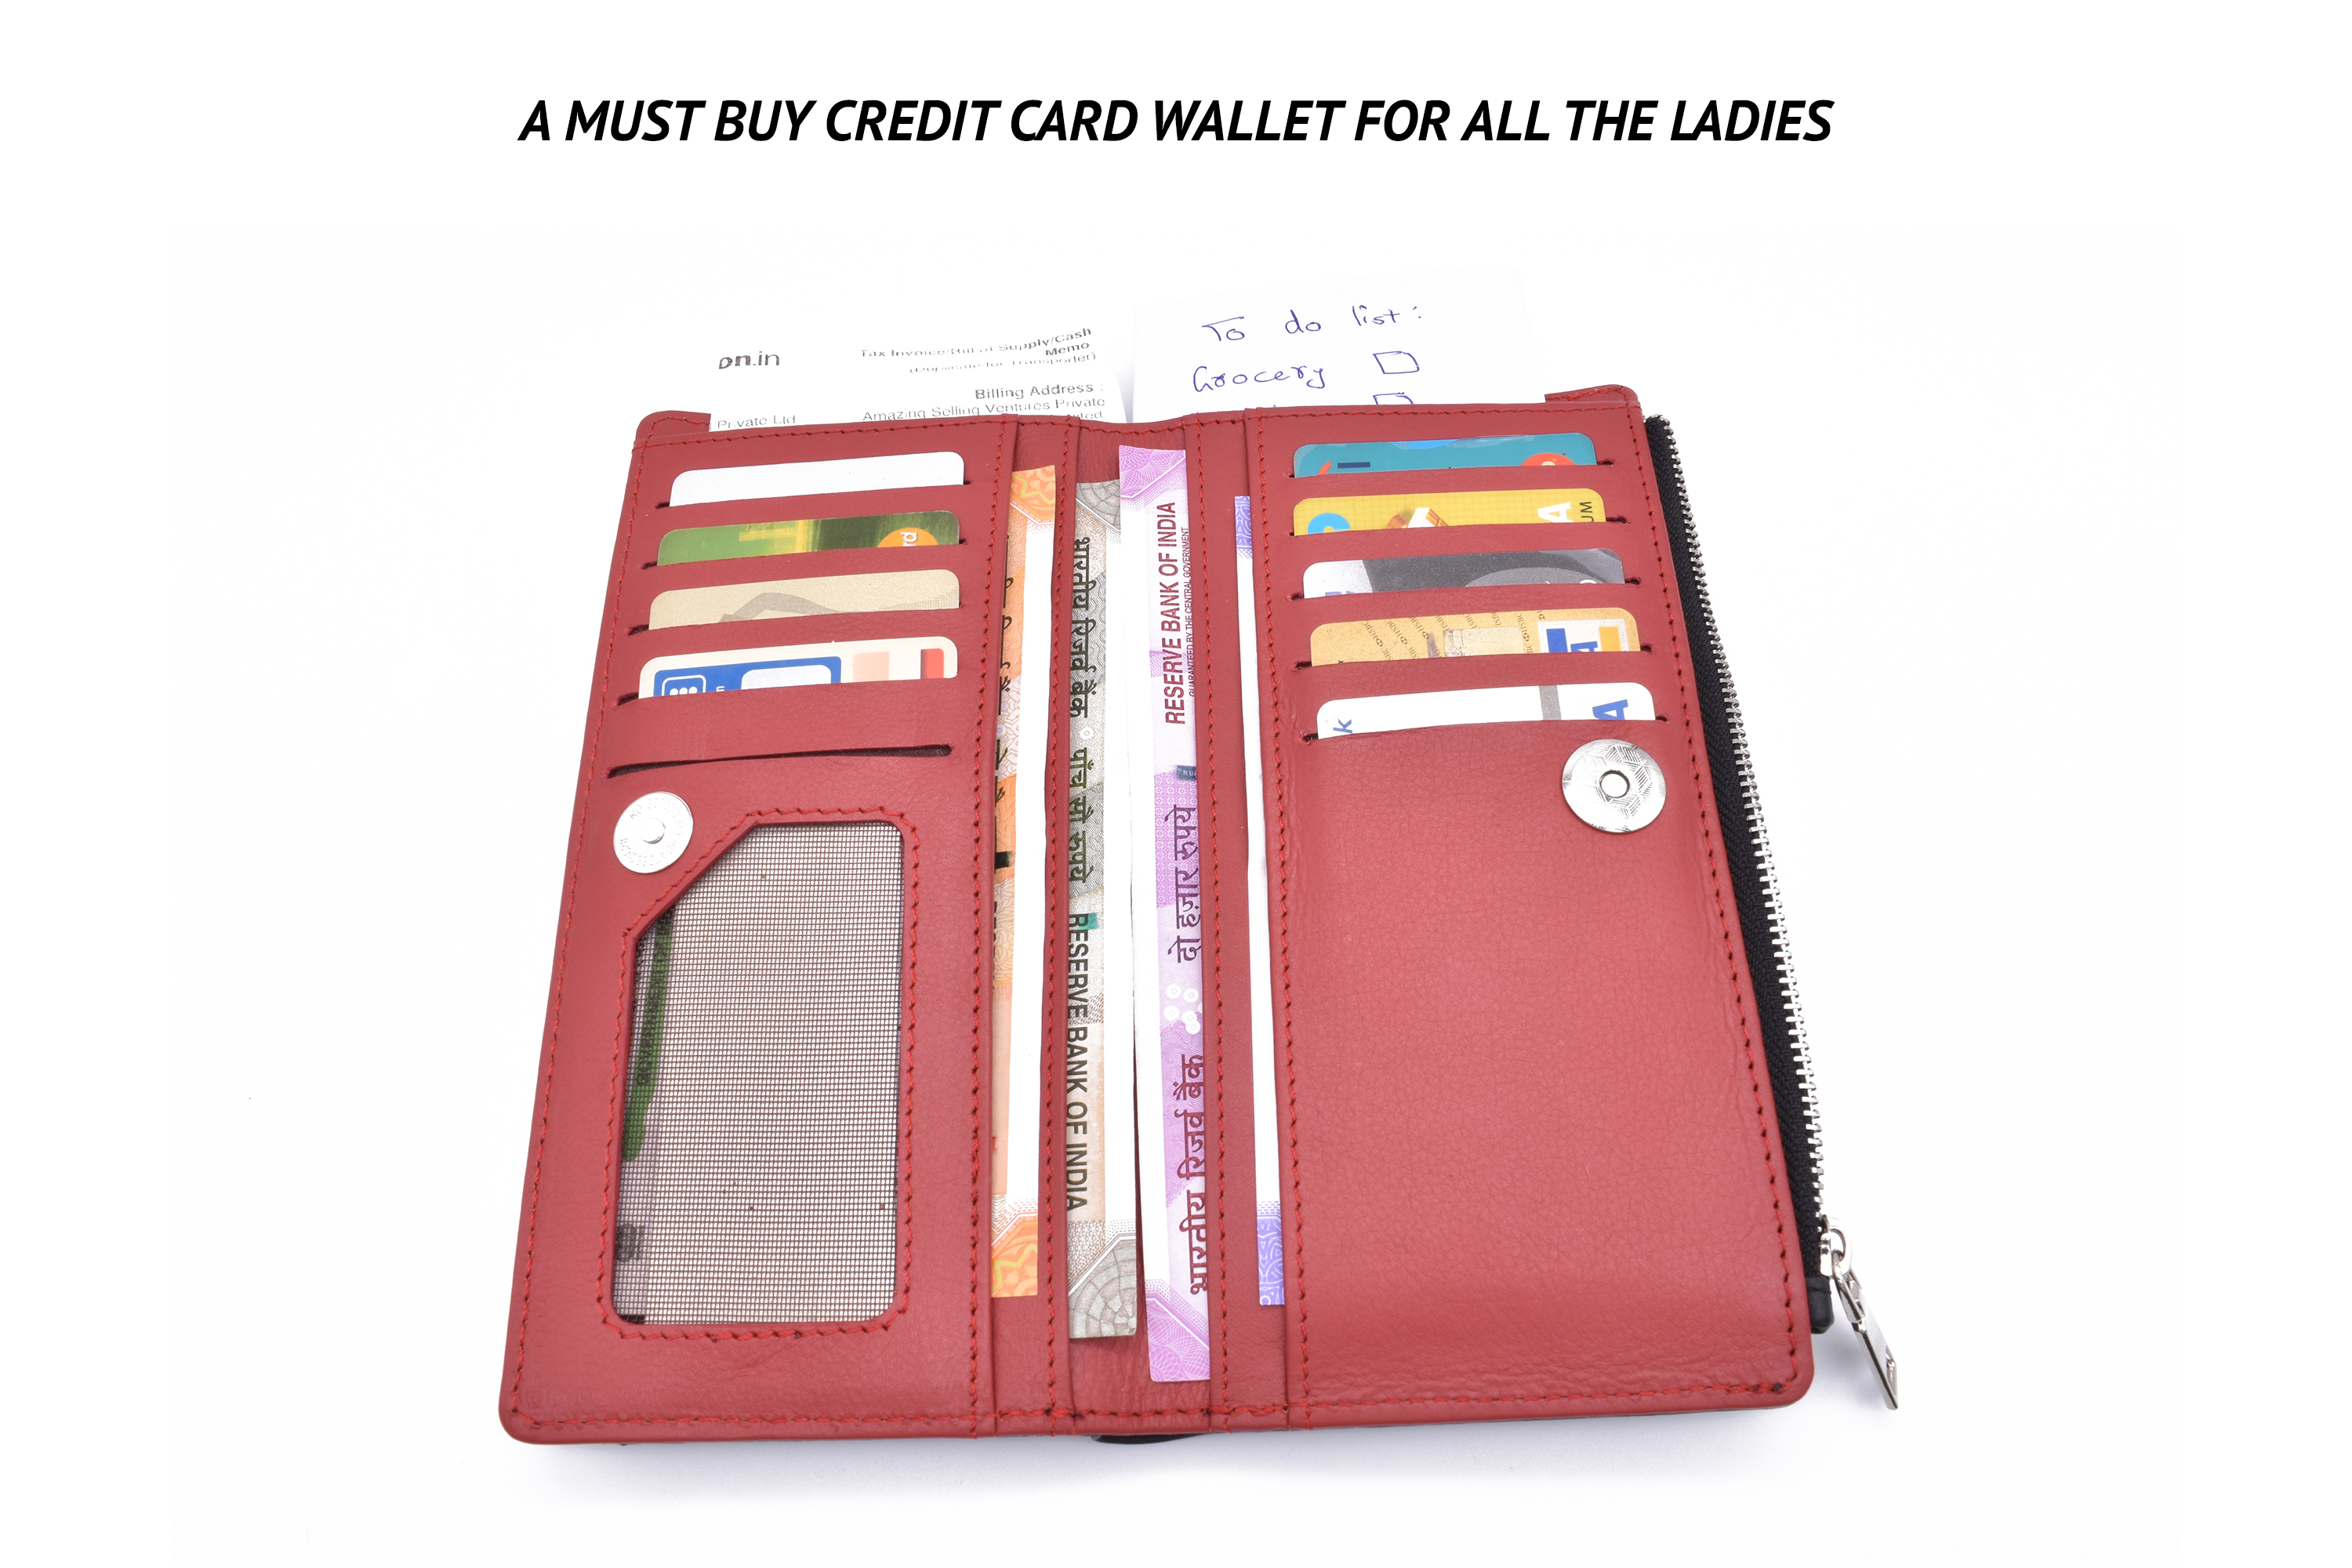 W338-Claudita-Women's wallet with loop and zip closing in genuine leather - Black/Red